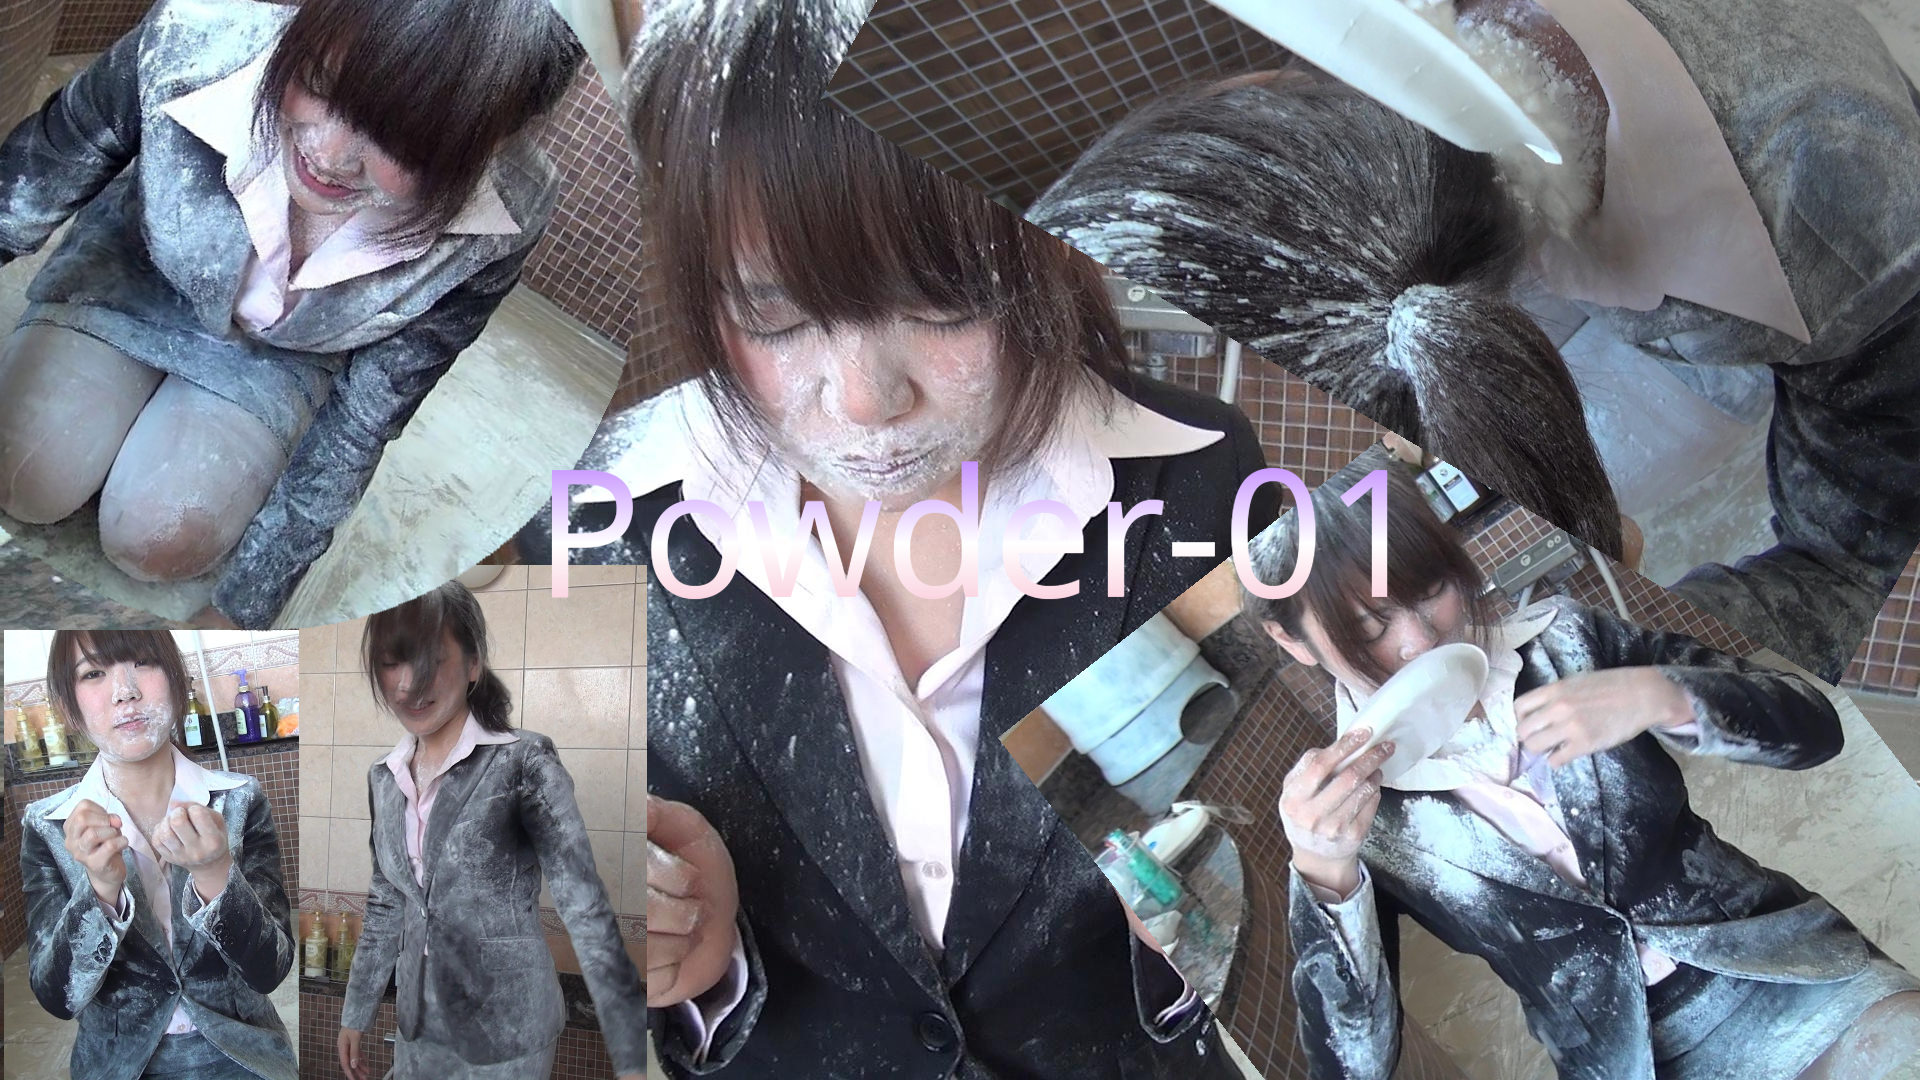 【Messy】Powder-01